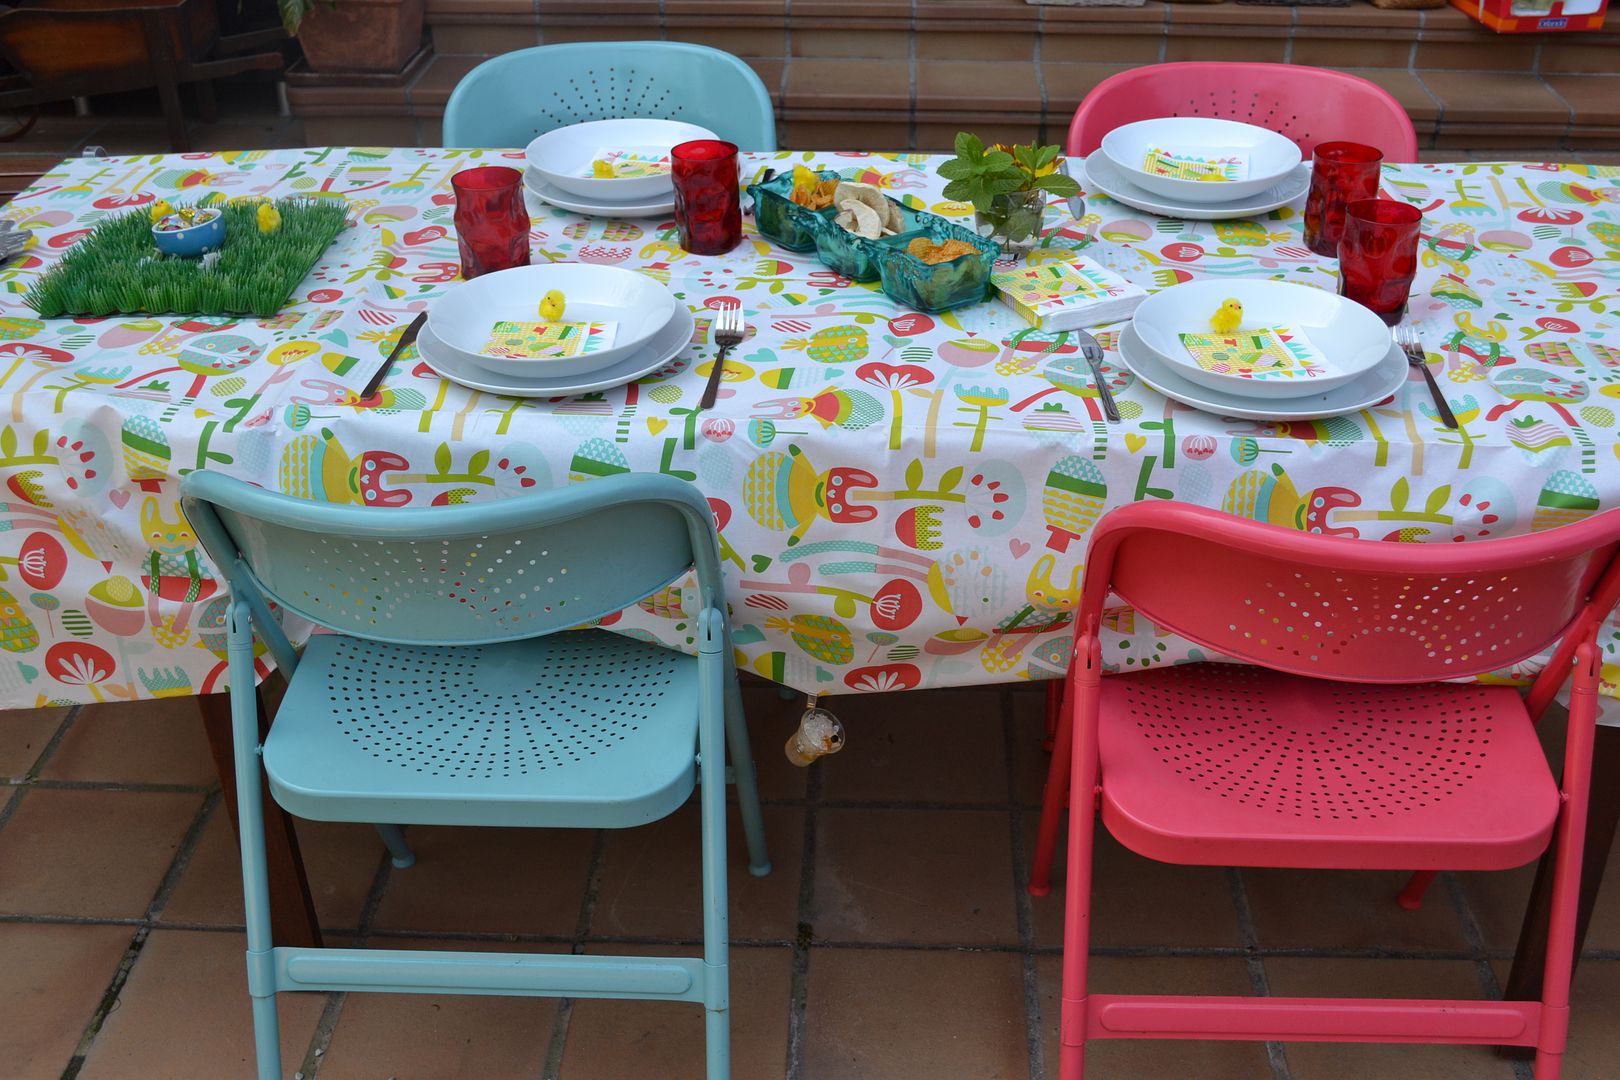  photo mesa-primavera-pascua-easter-table-ideas-decoracioacuten12_zpsa8dfd6e7.jpg